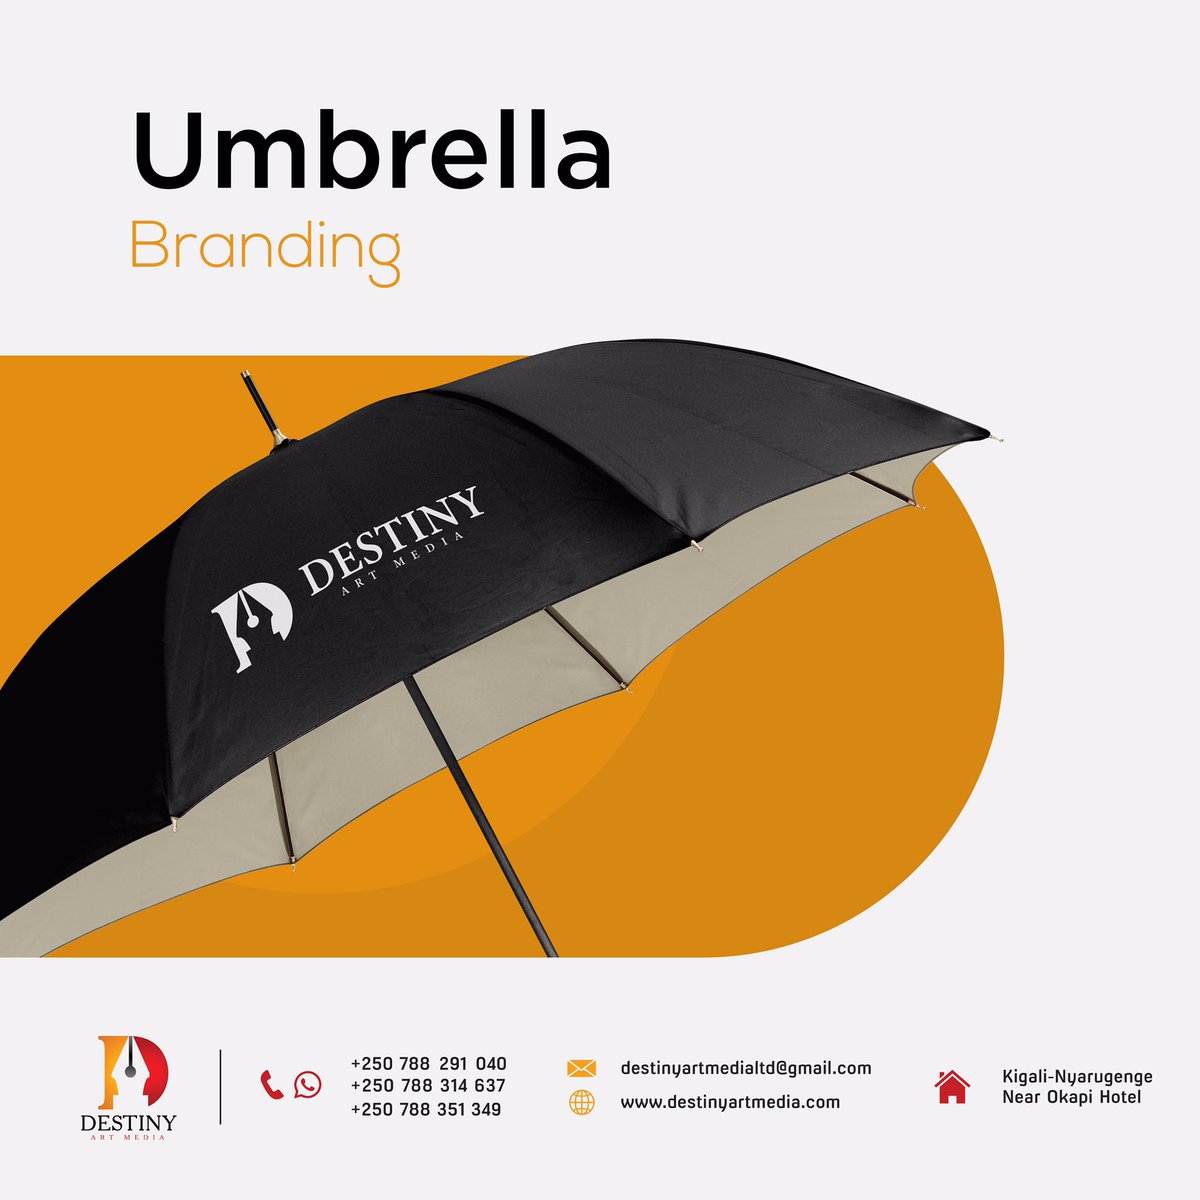 Branded umbrella @SanlamInvest @MilleCollines @Marriott @kigaliserena @Radiotv10rwanda @FourSeasons @KISSFM_es #RWA #KigaliConventionCentre #Kigali